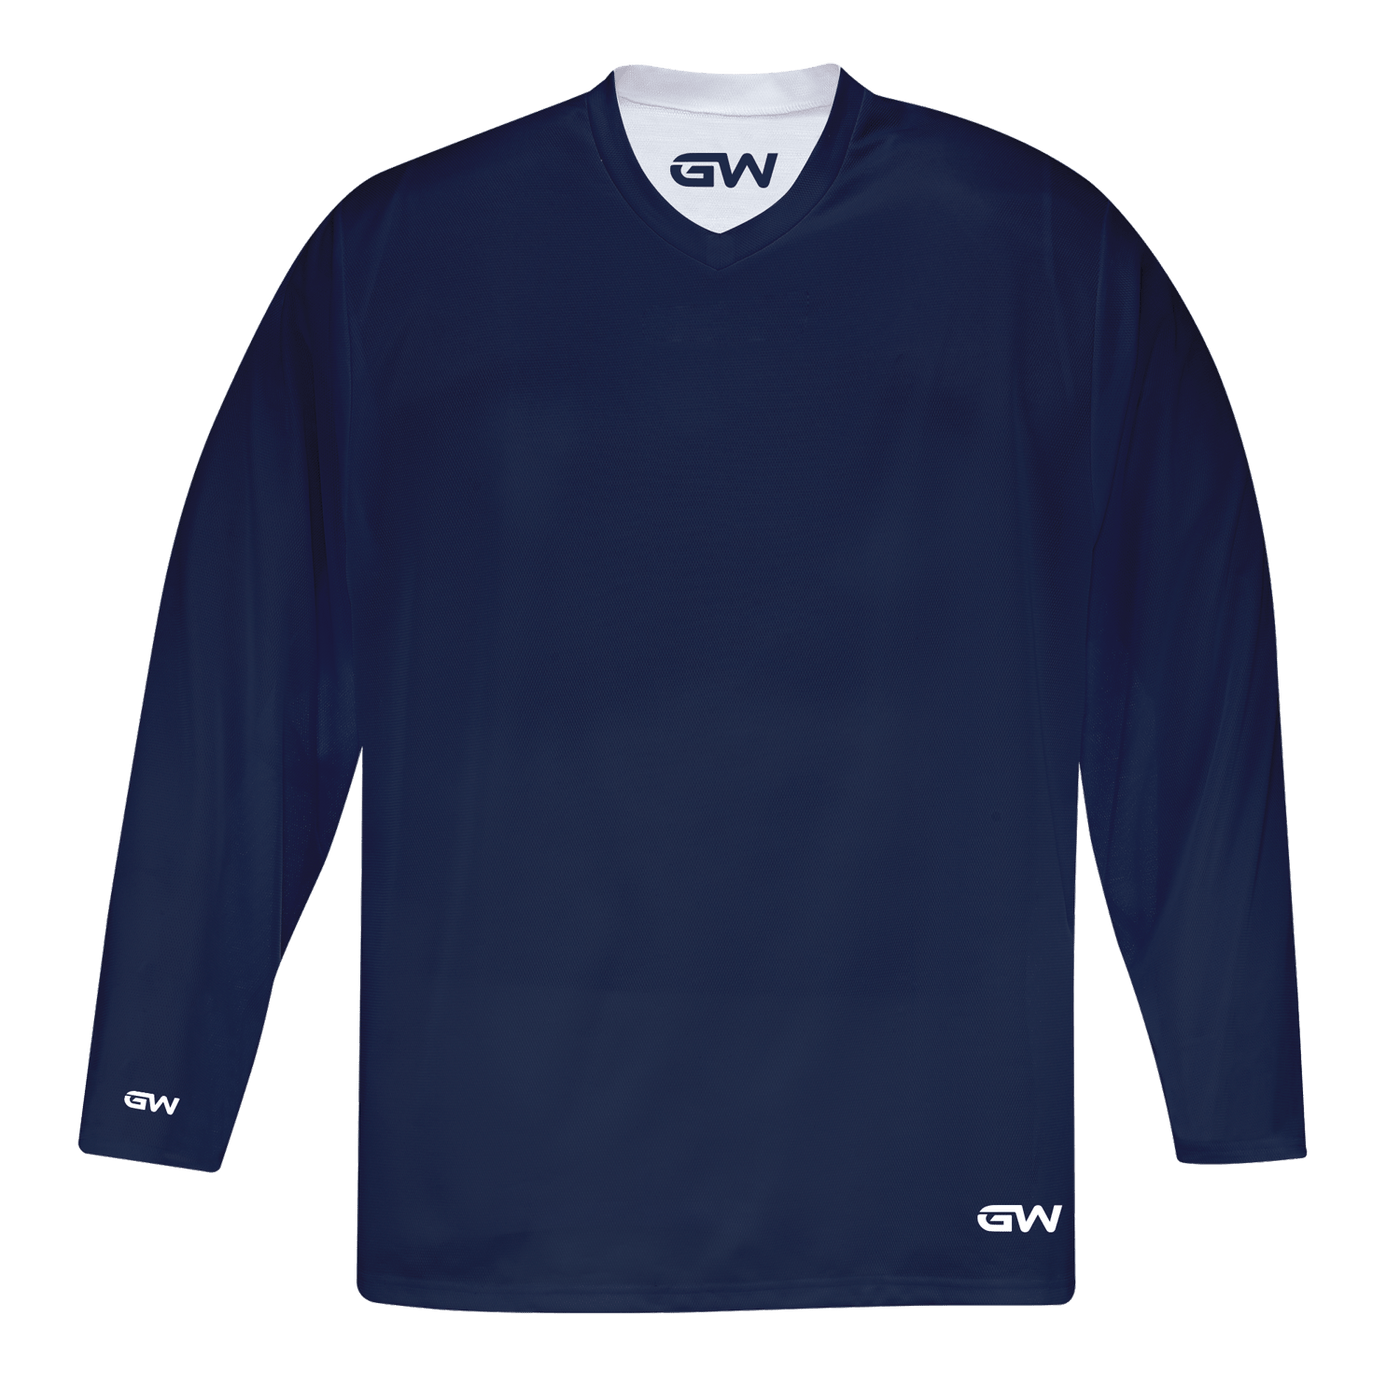 GameWear GW7500 ProLite Series Reversible Senior Hockey Practice Jersey - Navy / White - The Hockey Shop Source For Sports